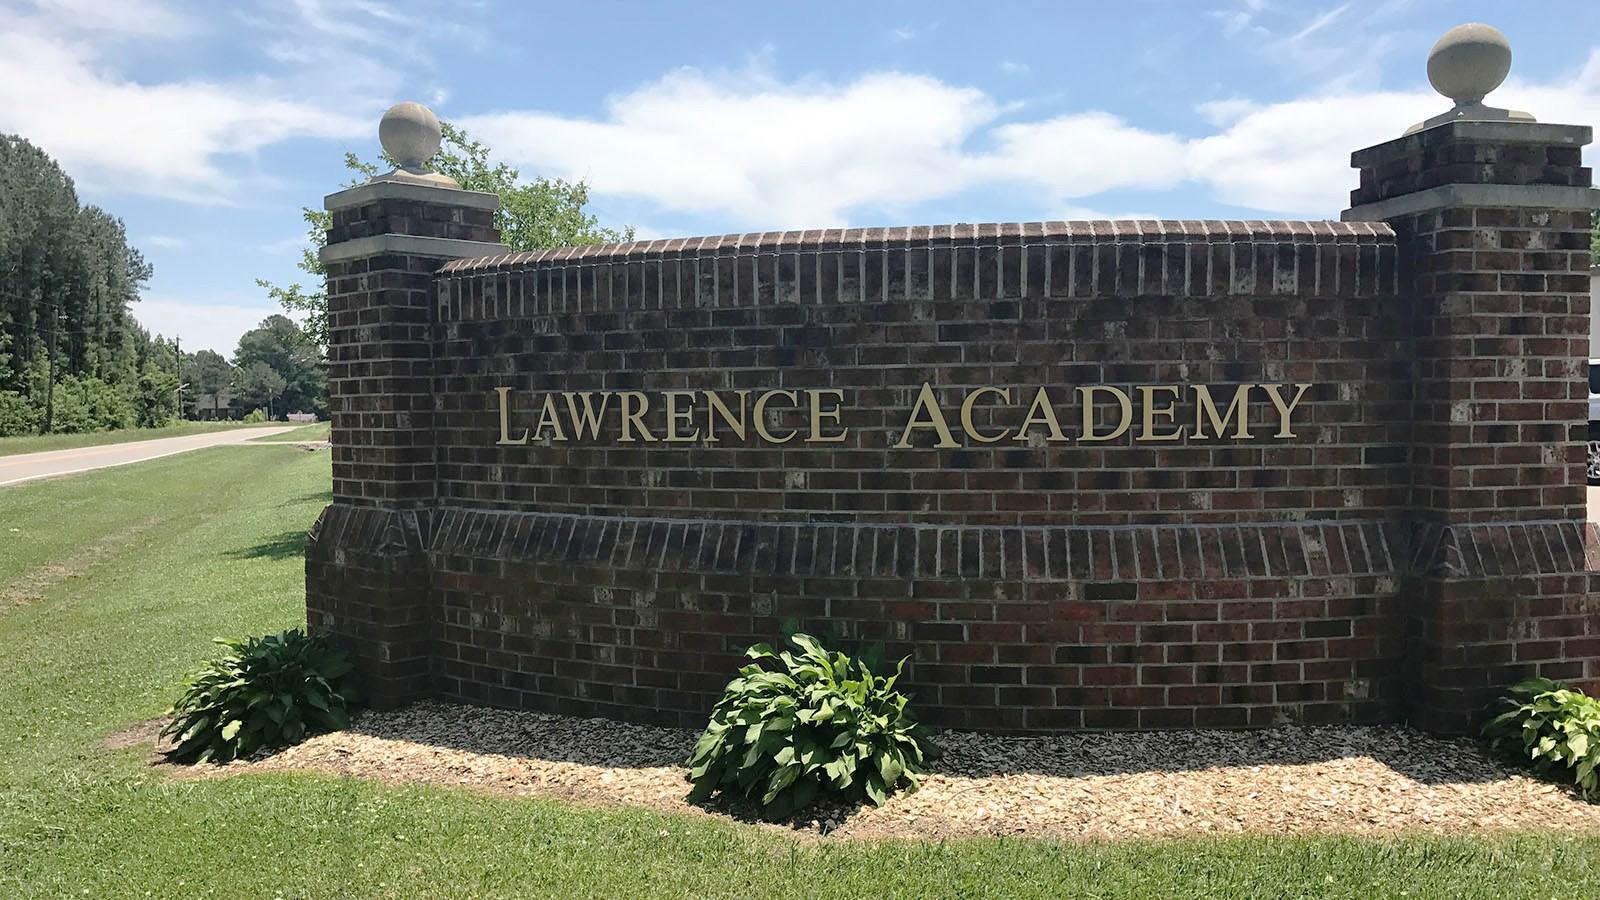 Lawrence Academy